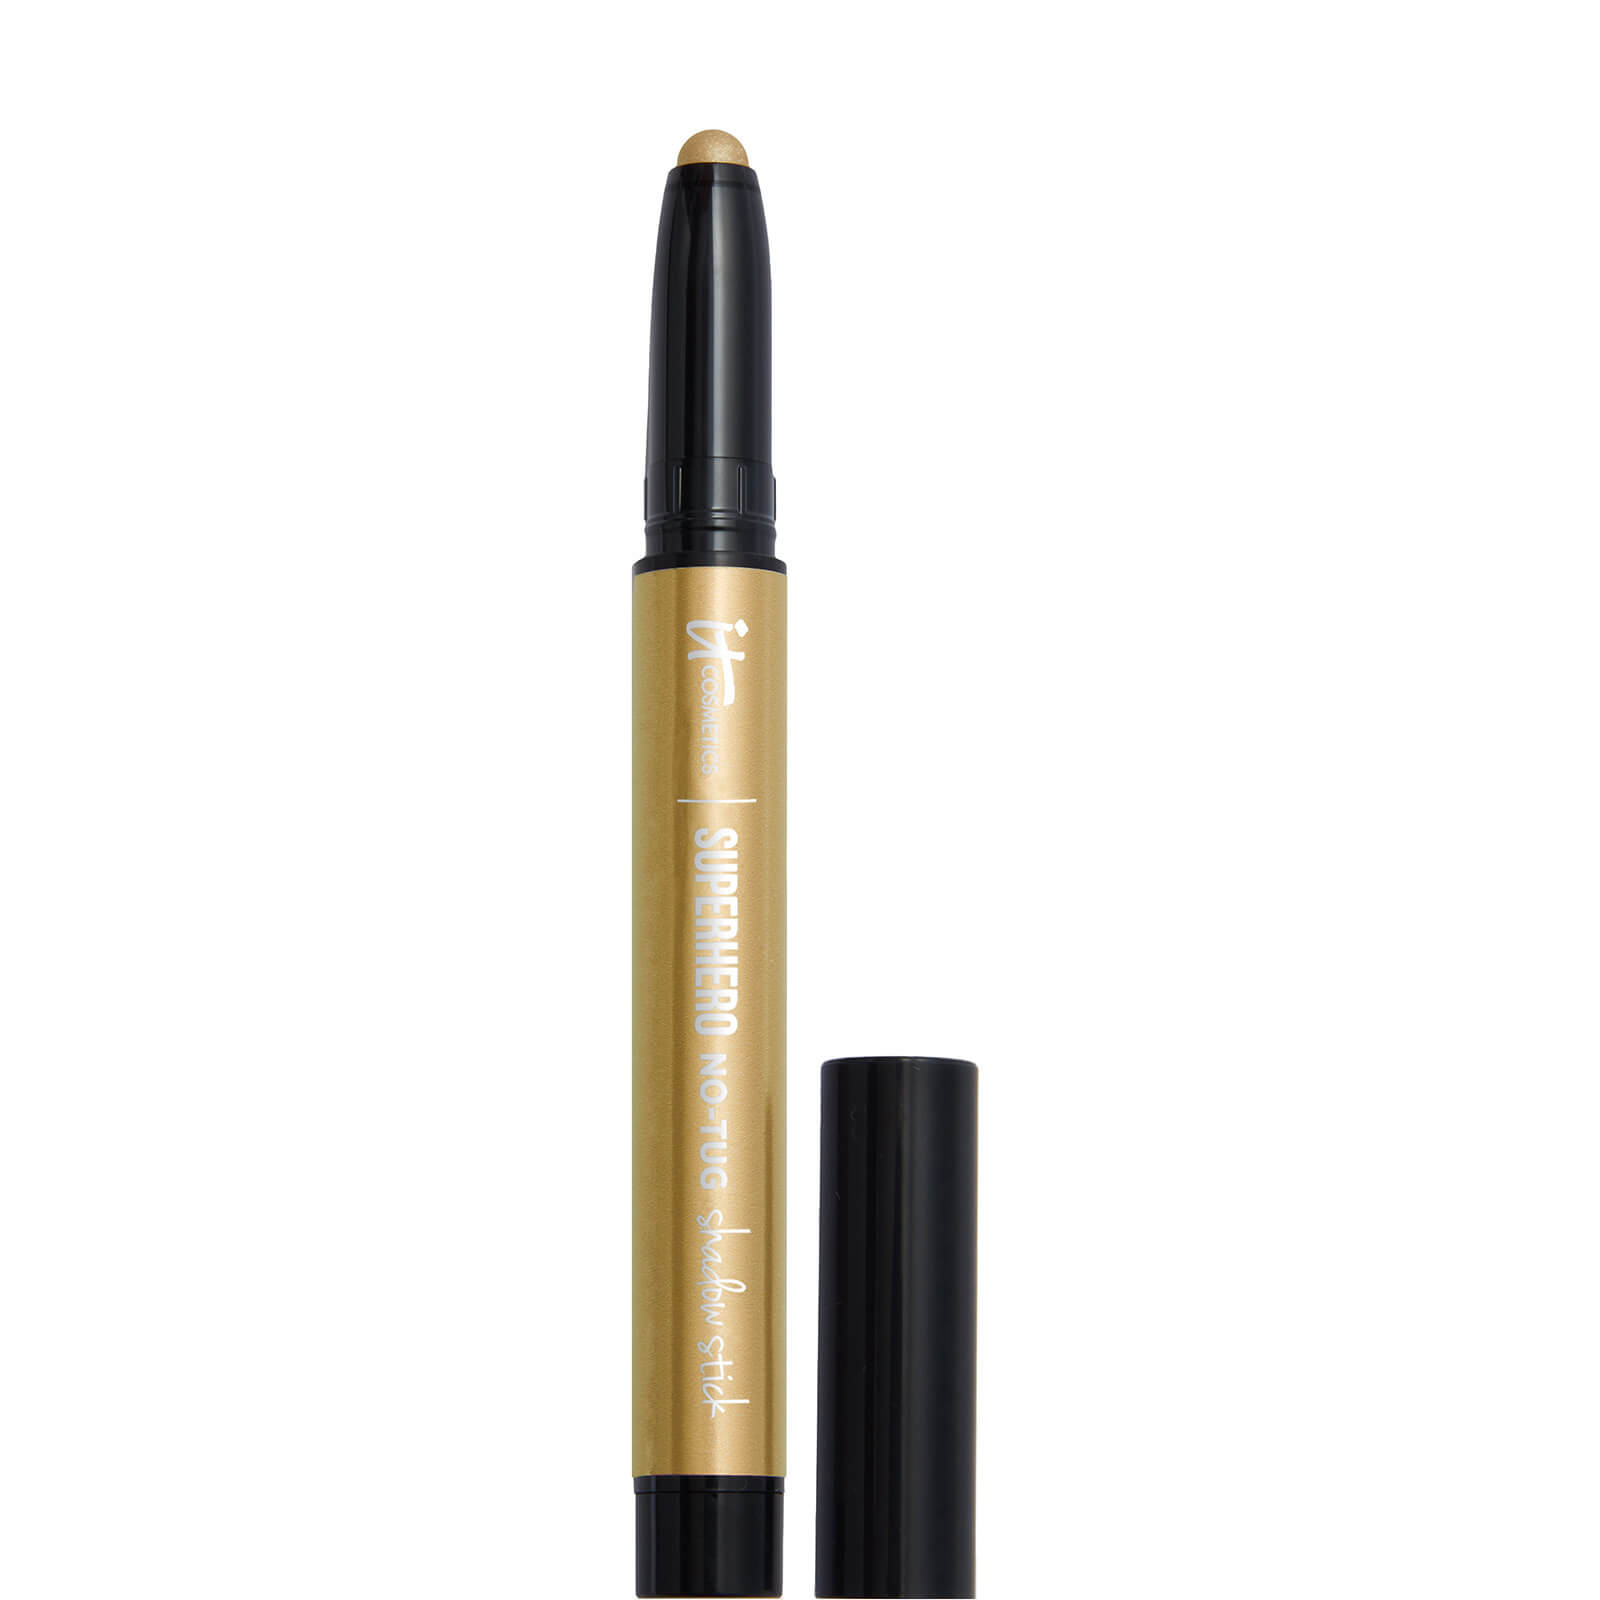 IT Cosmetics Superhero No-Tug Eyeshadow Stick 20g (Various Shades) - Gallant Gold